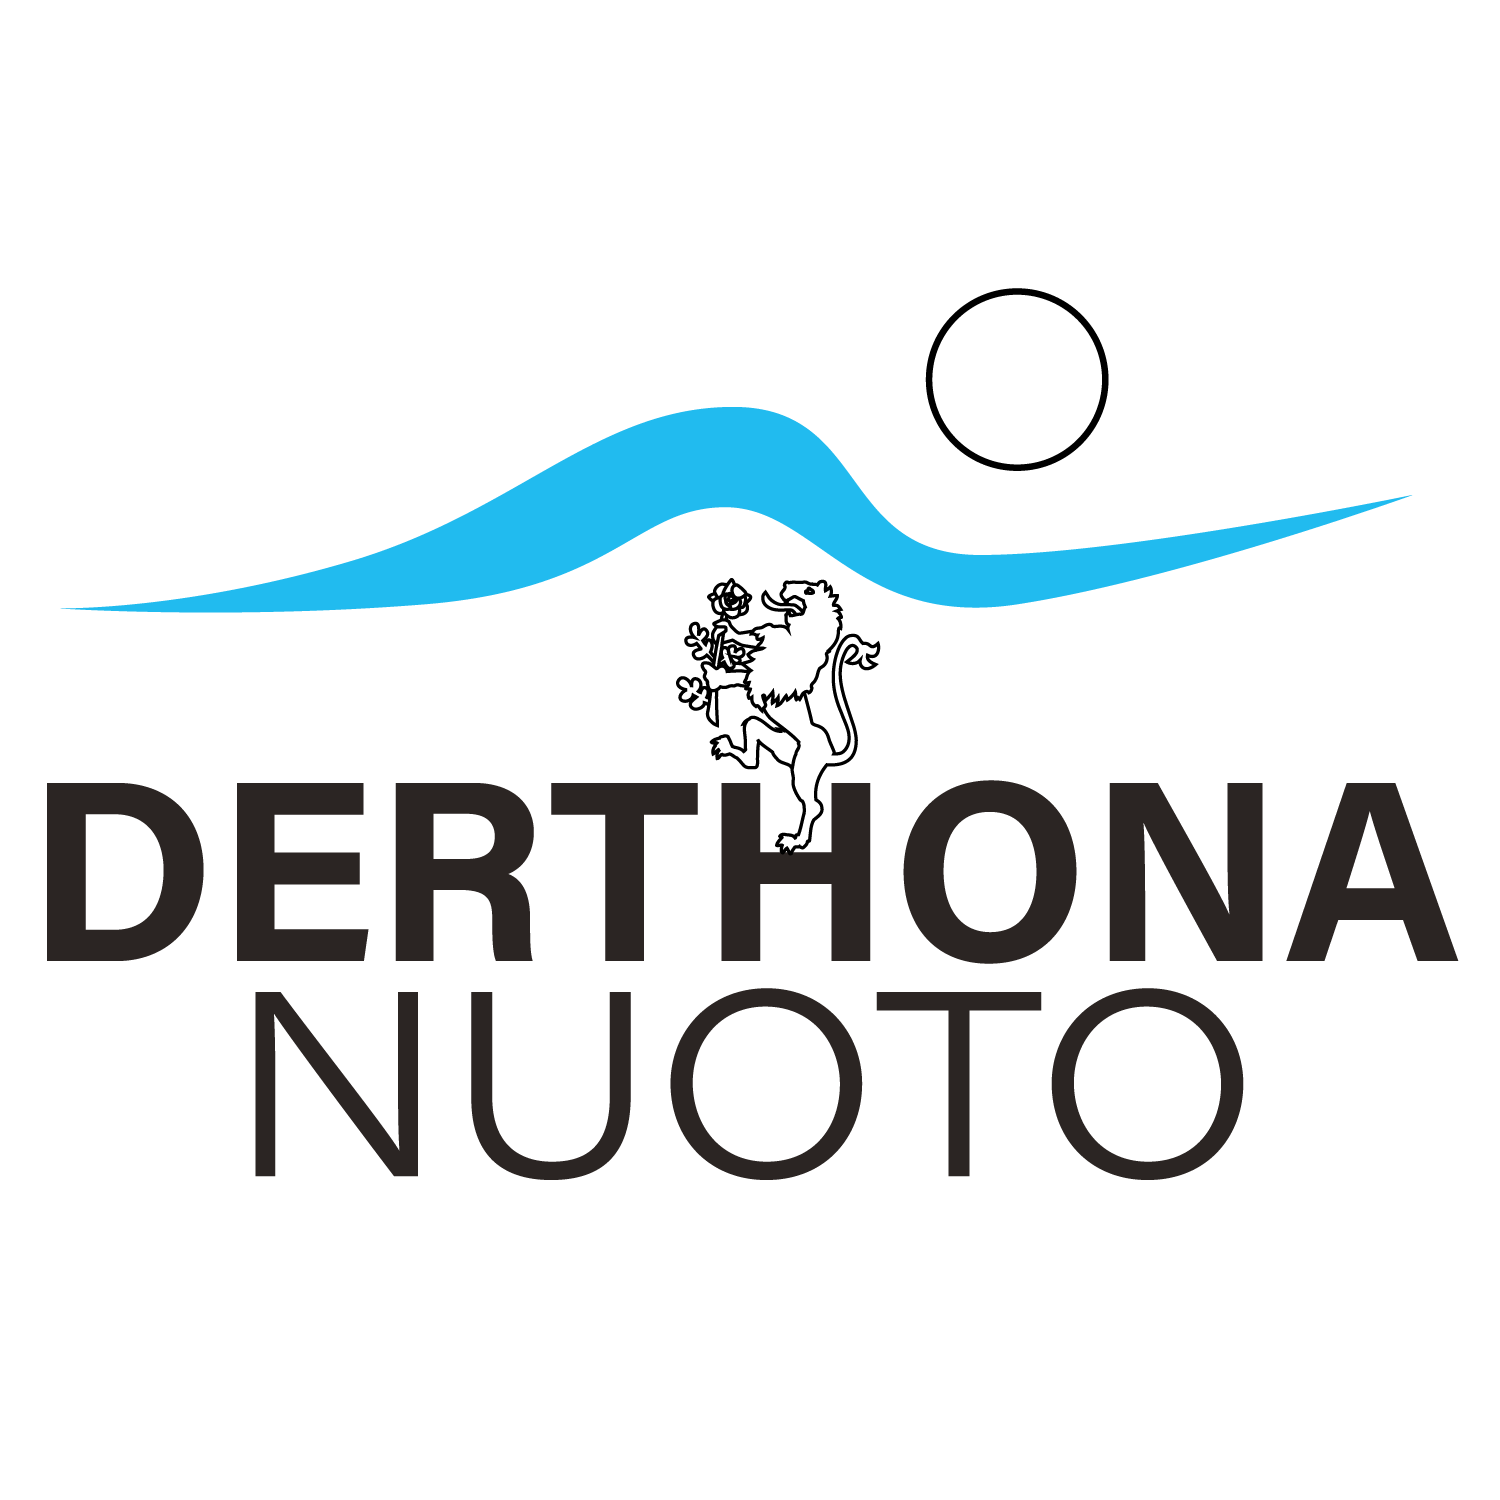 Derthona Nuoto